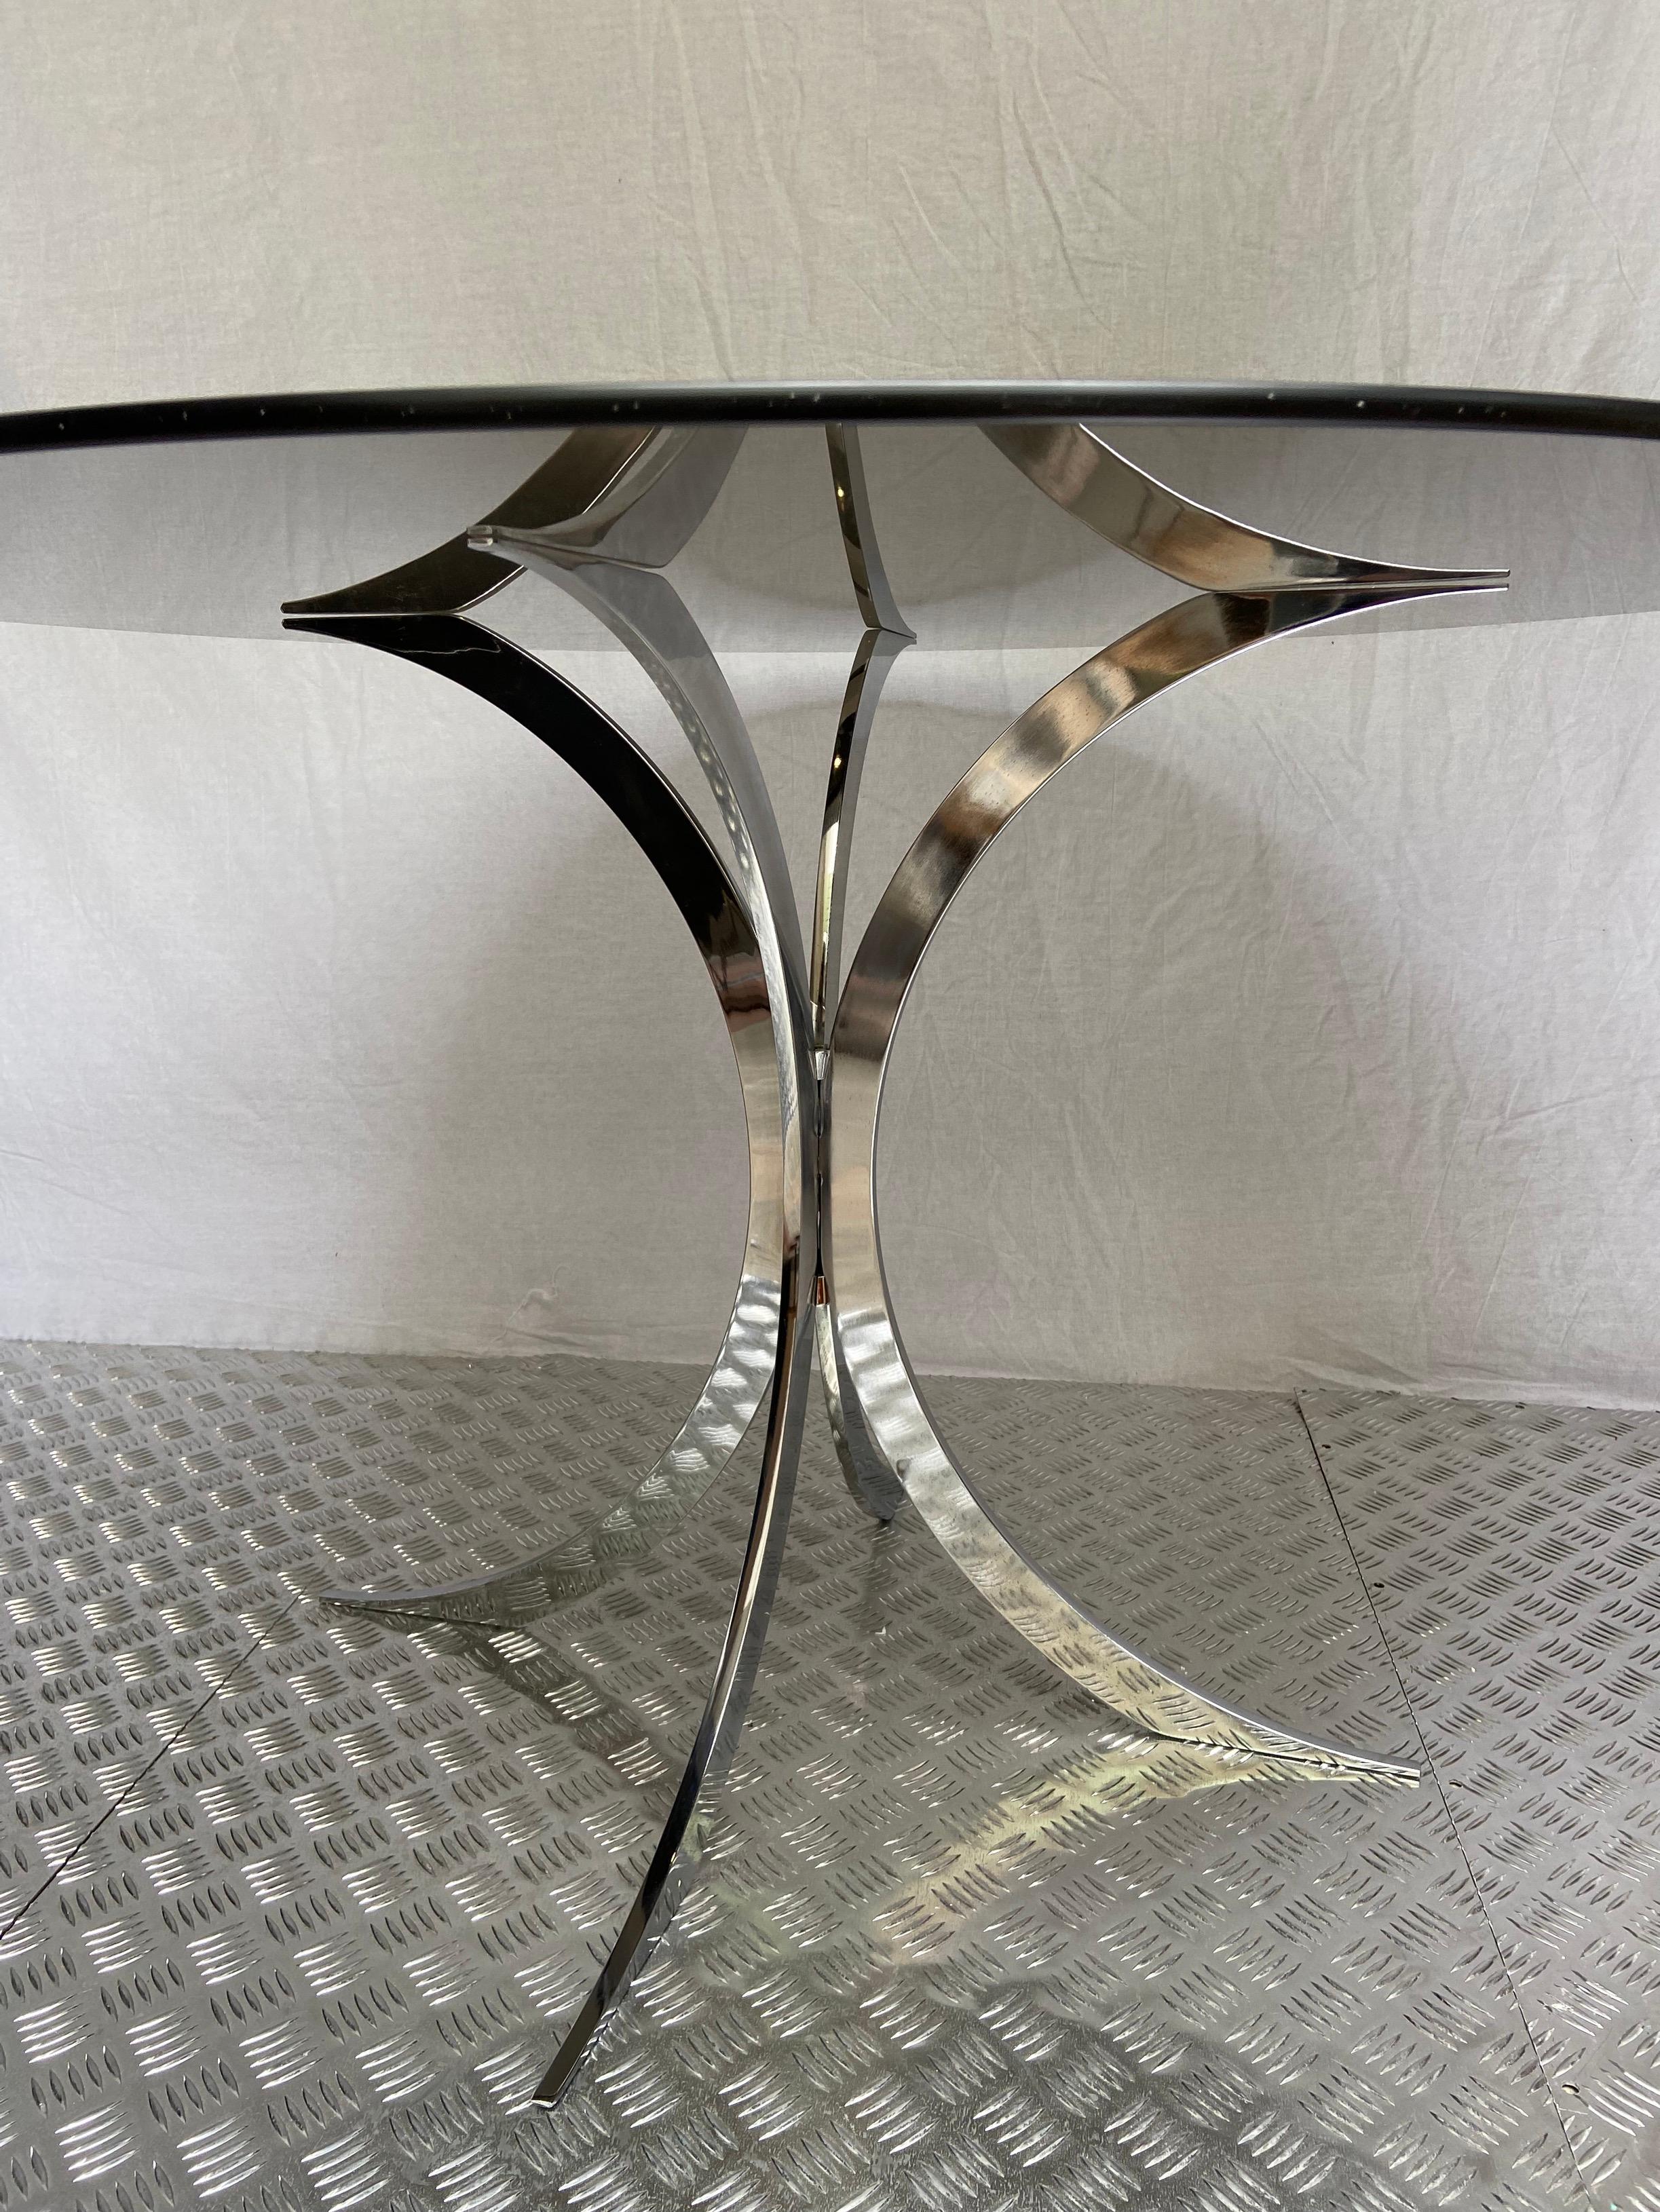 Living room table - Boris Tabacoff
Edited by Christofle
Circa 1970
Chromed metal base and smoked glass top
H73xD120.